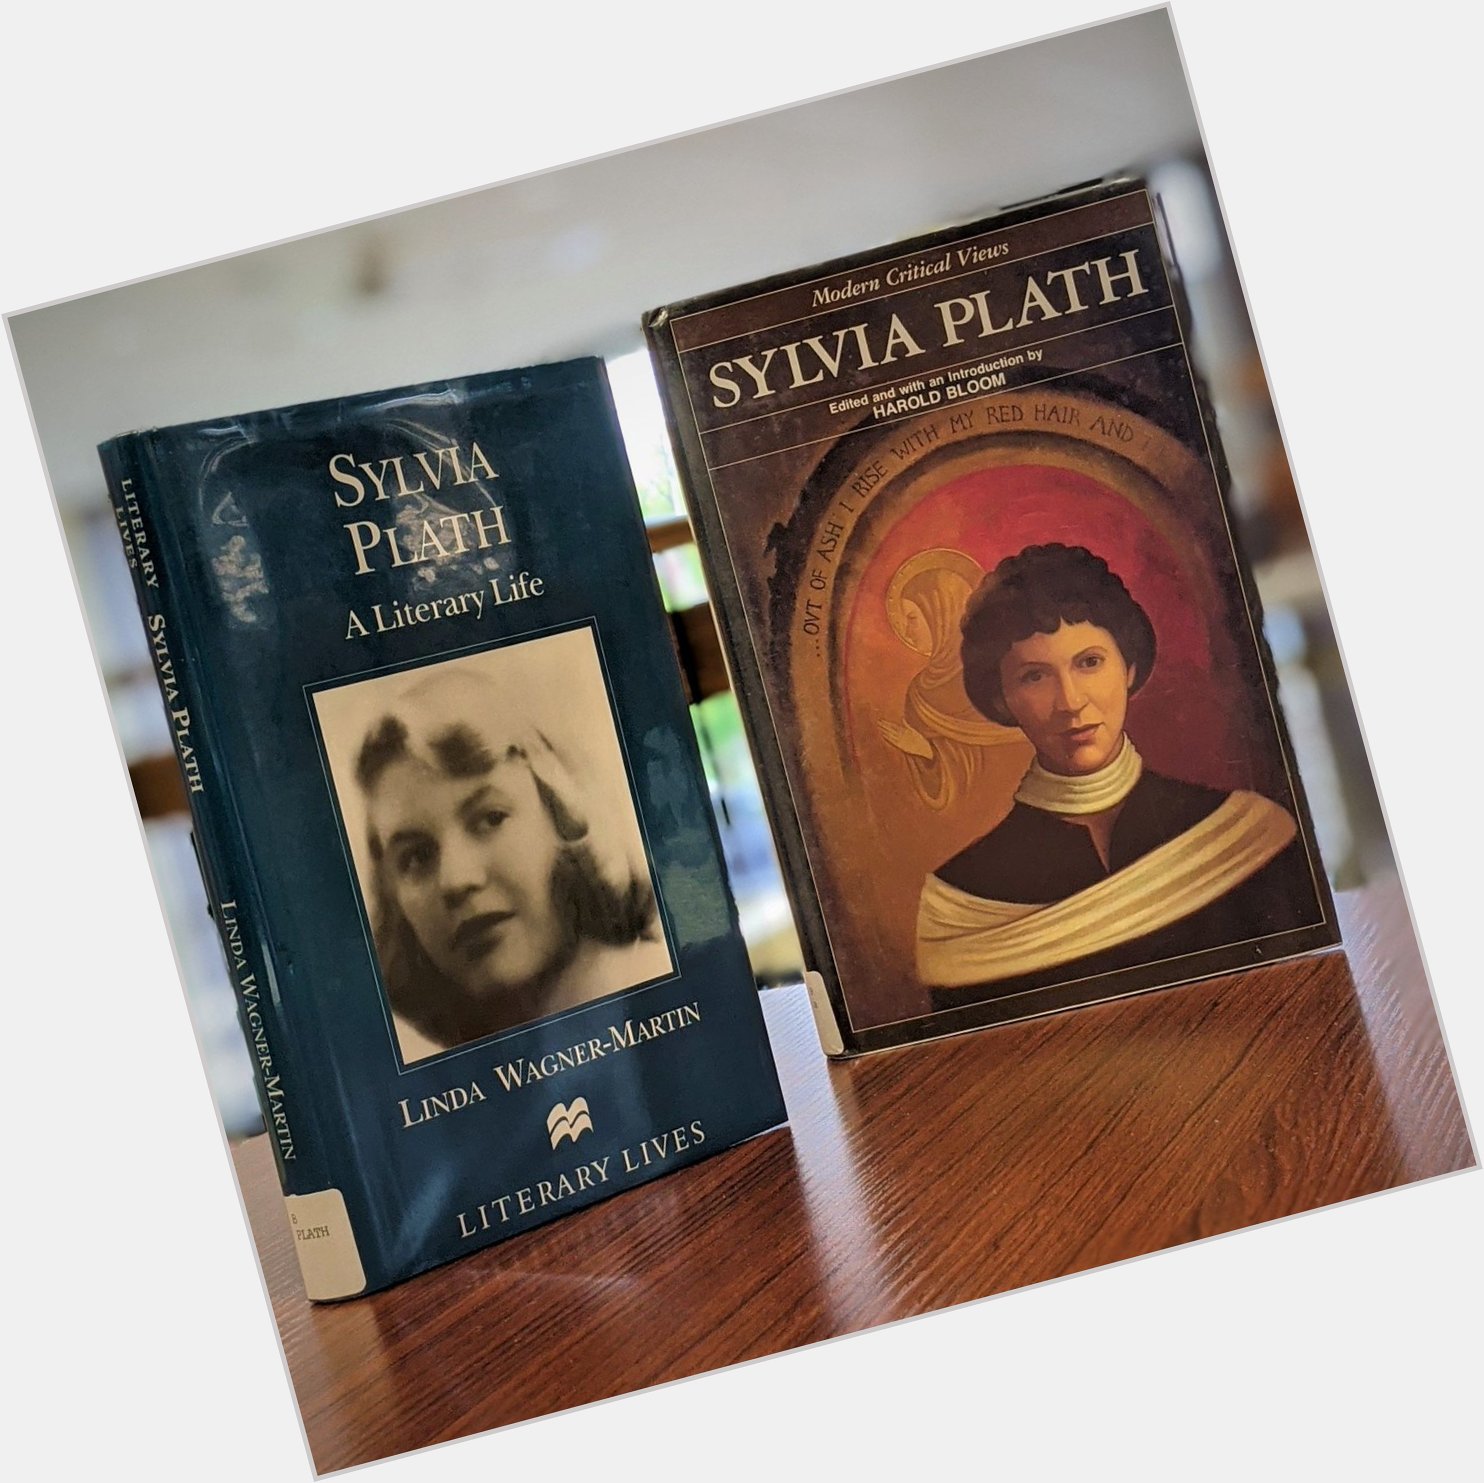 Happy birthday, Sylvia Plath!   